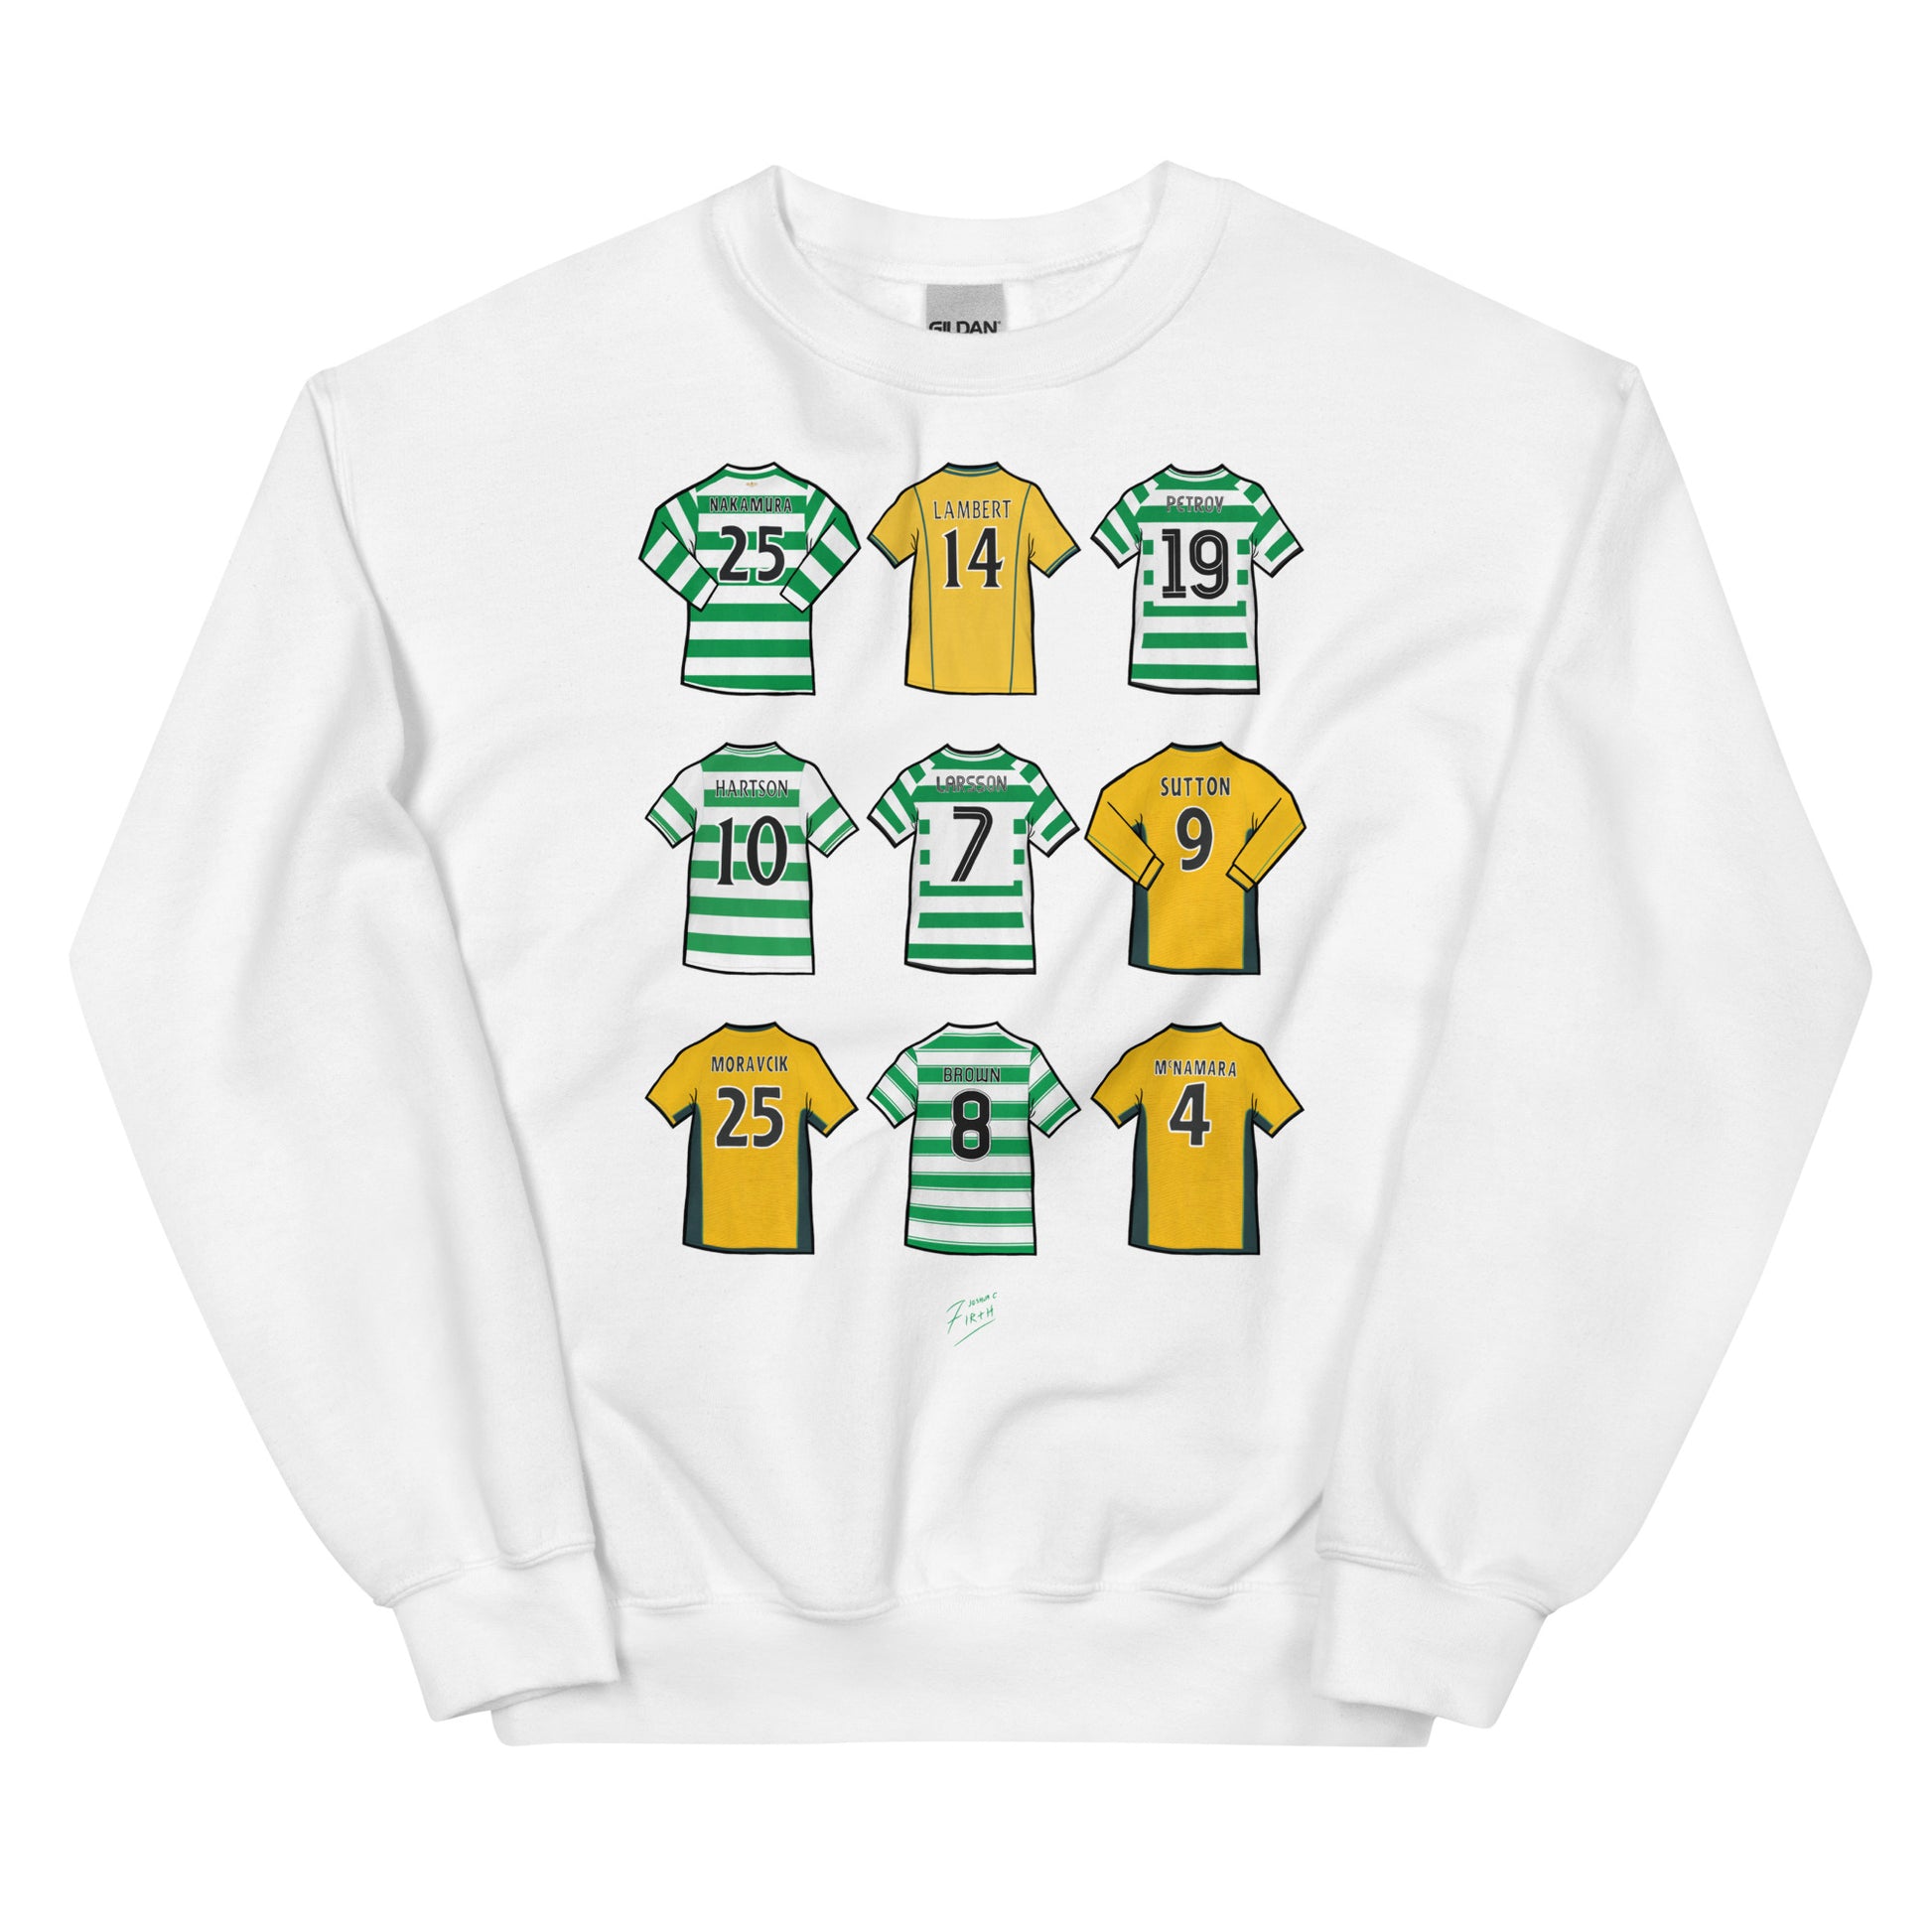 White Sweatshirt Celtic inspired, legends of the club illustrated artwork featuring names such as Nakamura, Chris Sutton, John Harrison, Henrik Larsson, Scott Brown & more